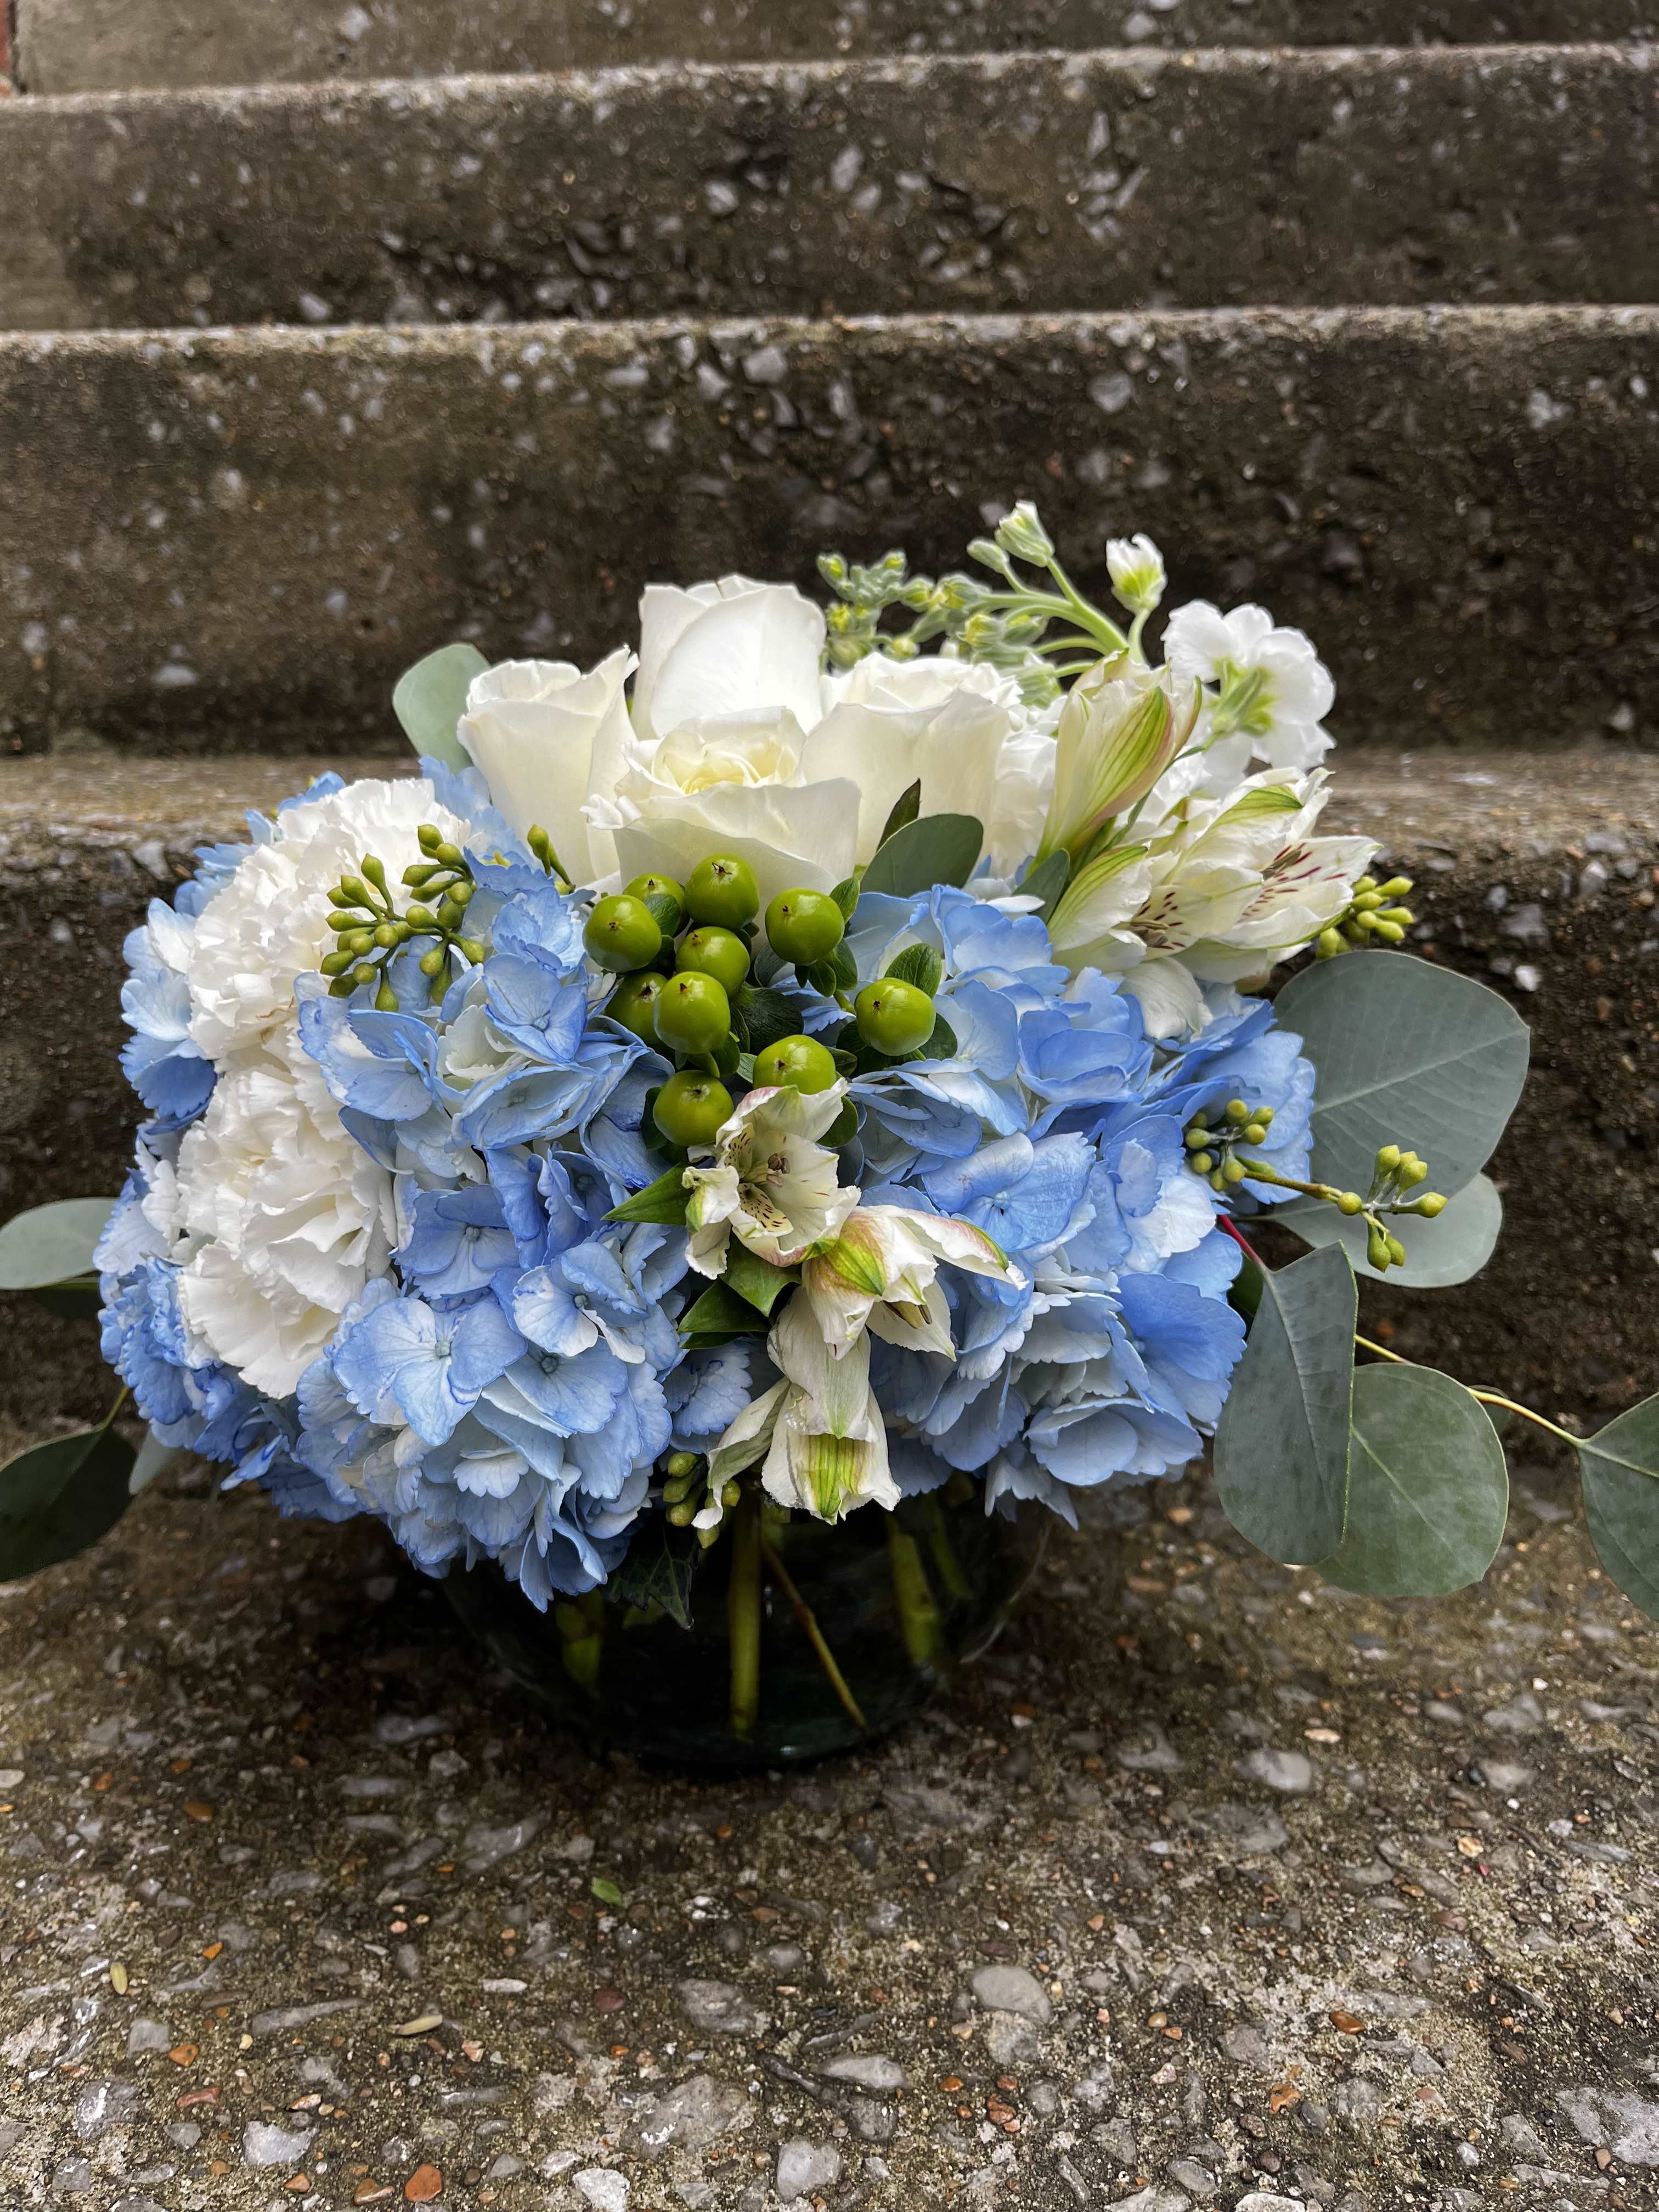 Pure Liberty - This arrangement has blue hydrangea, white carnations, white alstroemeria, green Hypericum, white roses, white stock and beautiful greenery.